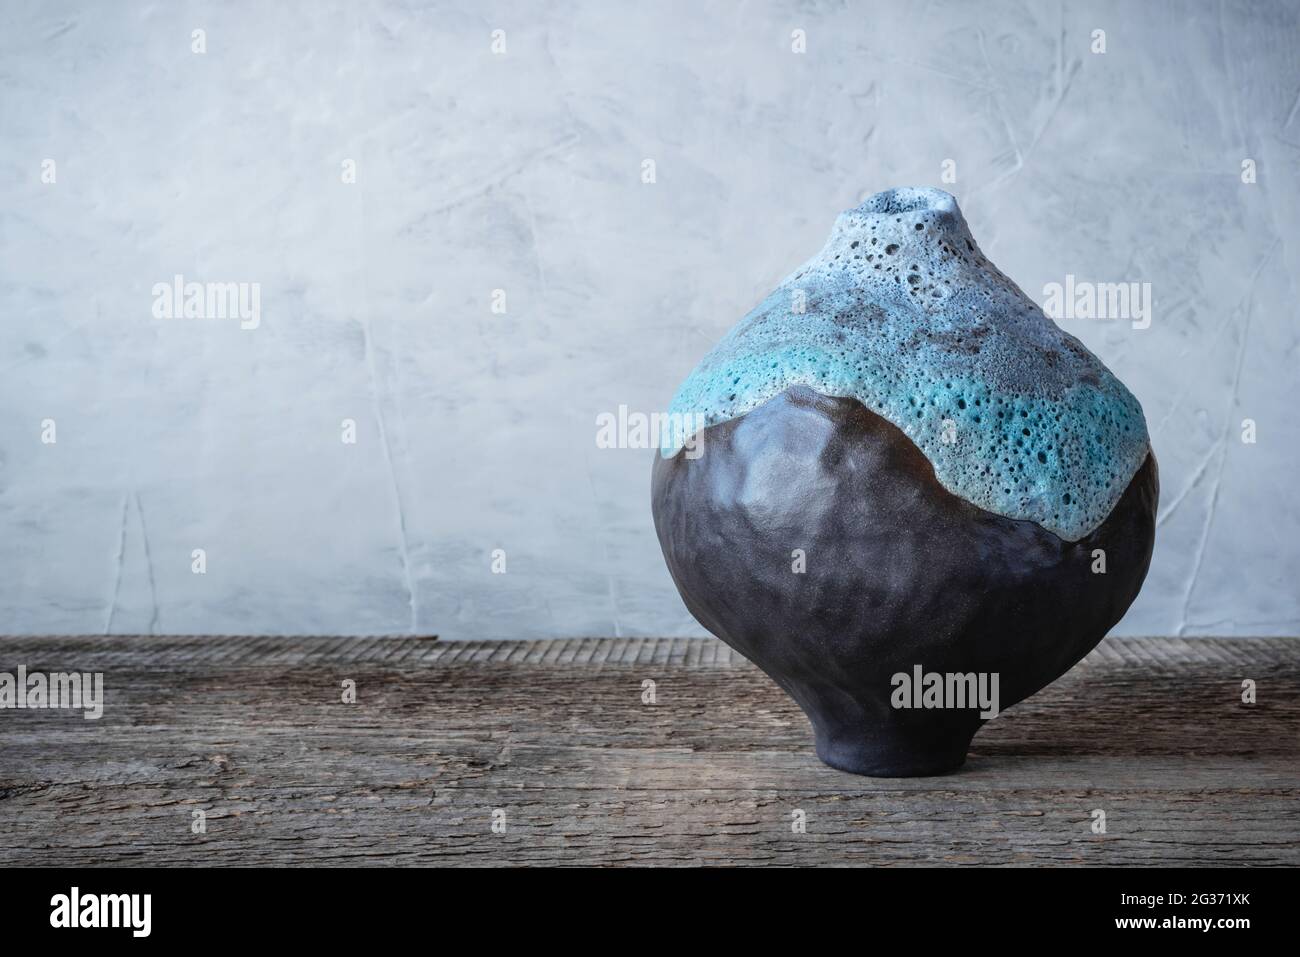 Handmade ceramics in the style of wabi sabi. Stock Photo